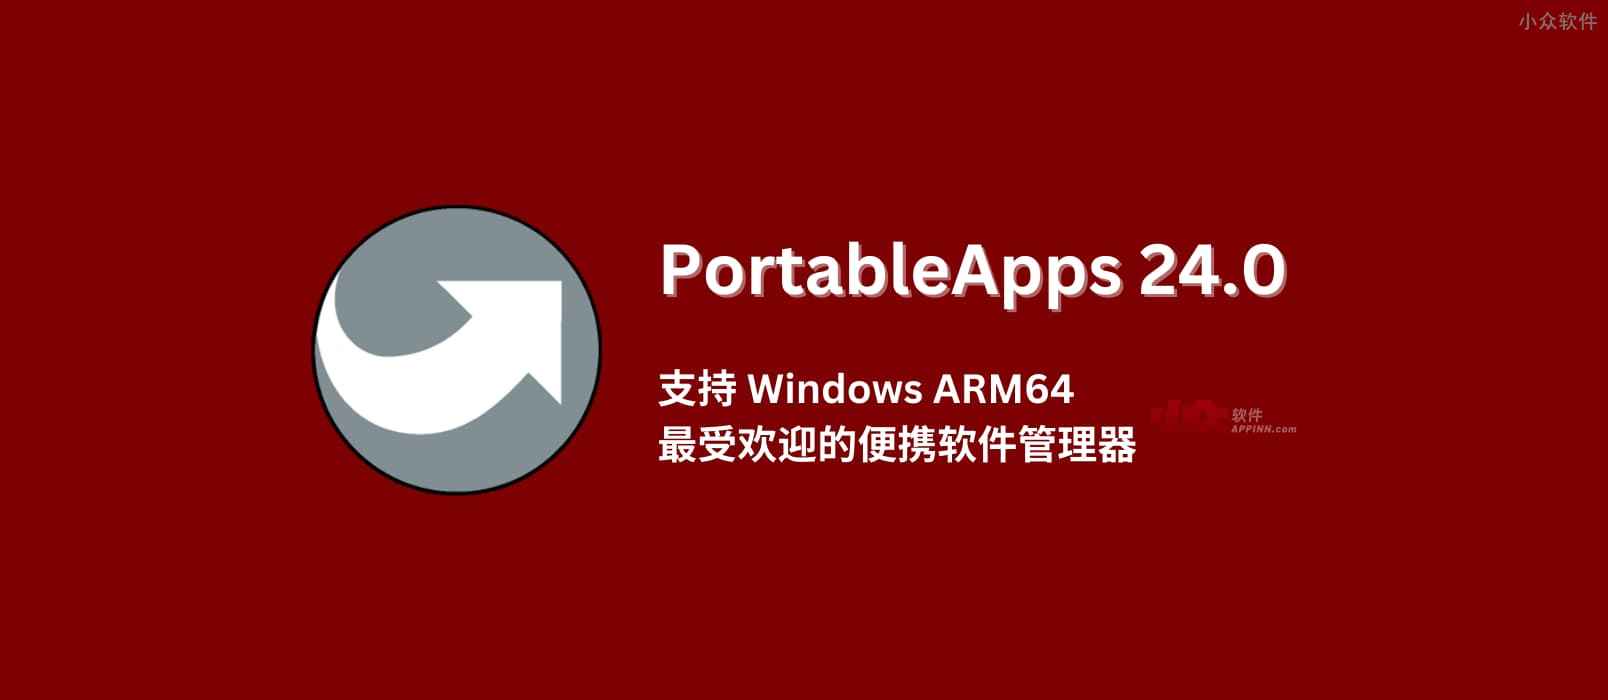 PortableApps 24 支持 Windows ARM64，最受欢迎的便携软件管理器，超 450 款真便携软件